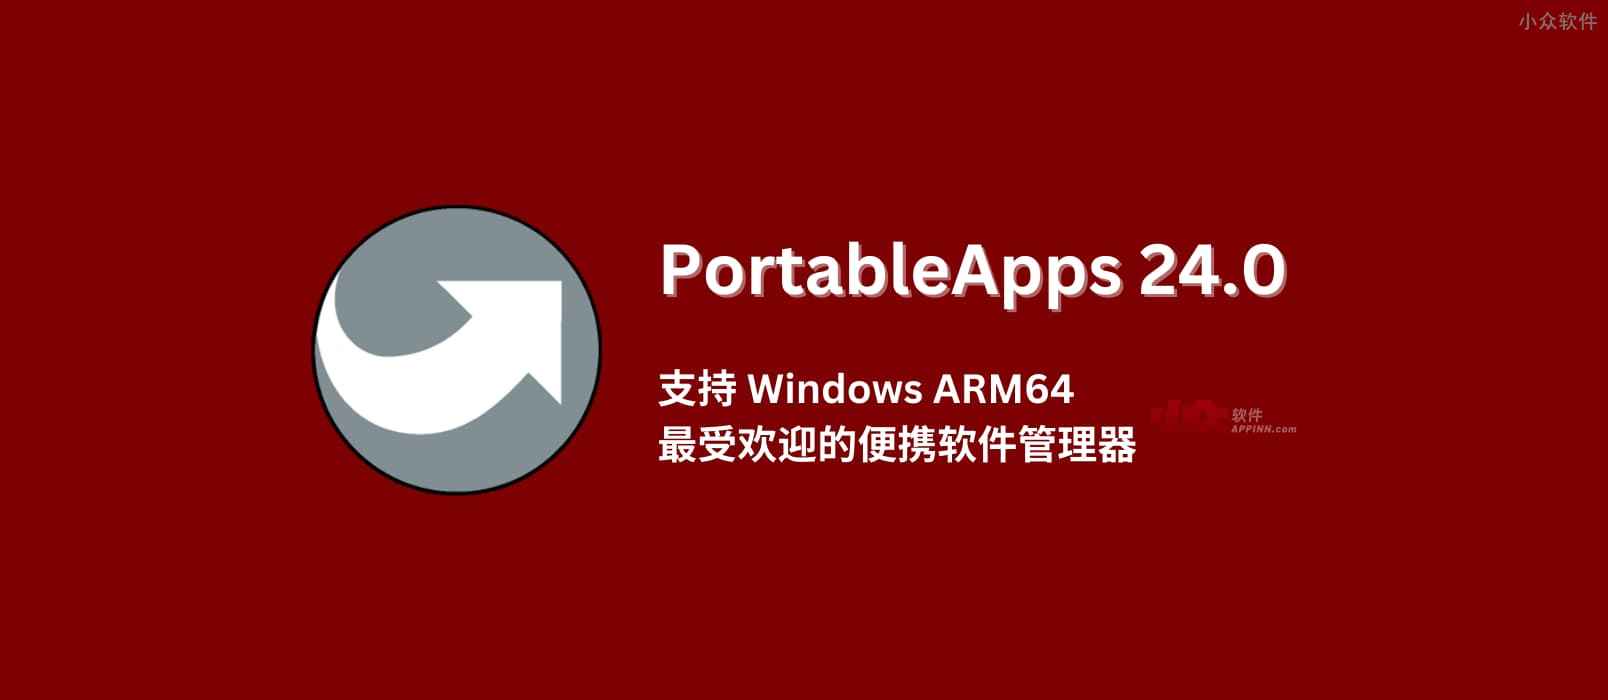 PortableApps 24 支持 Windows ARM64，最受欢迎的便携软件管理器，超 450 款真便携软件